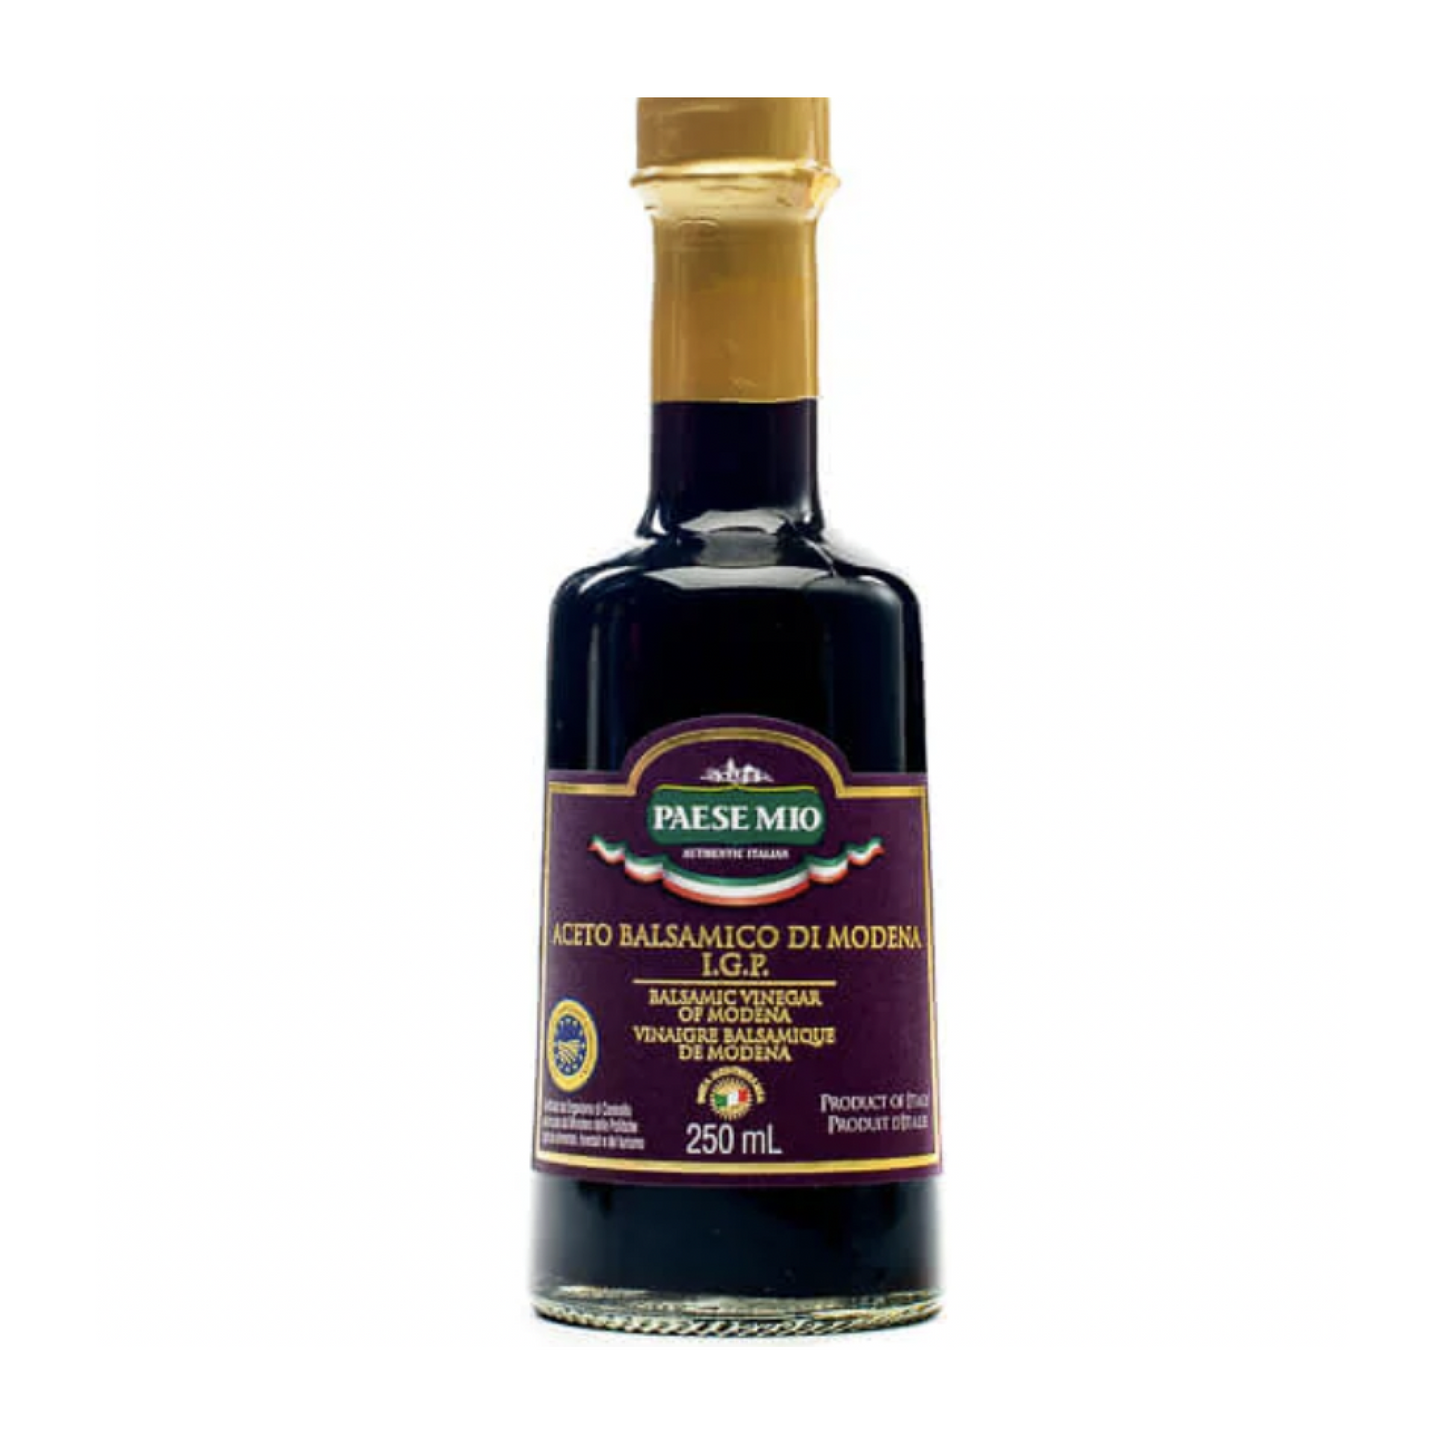 Paese Mio Balsamic Vinegar of Modena 250ml